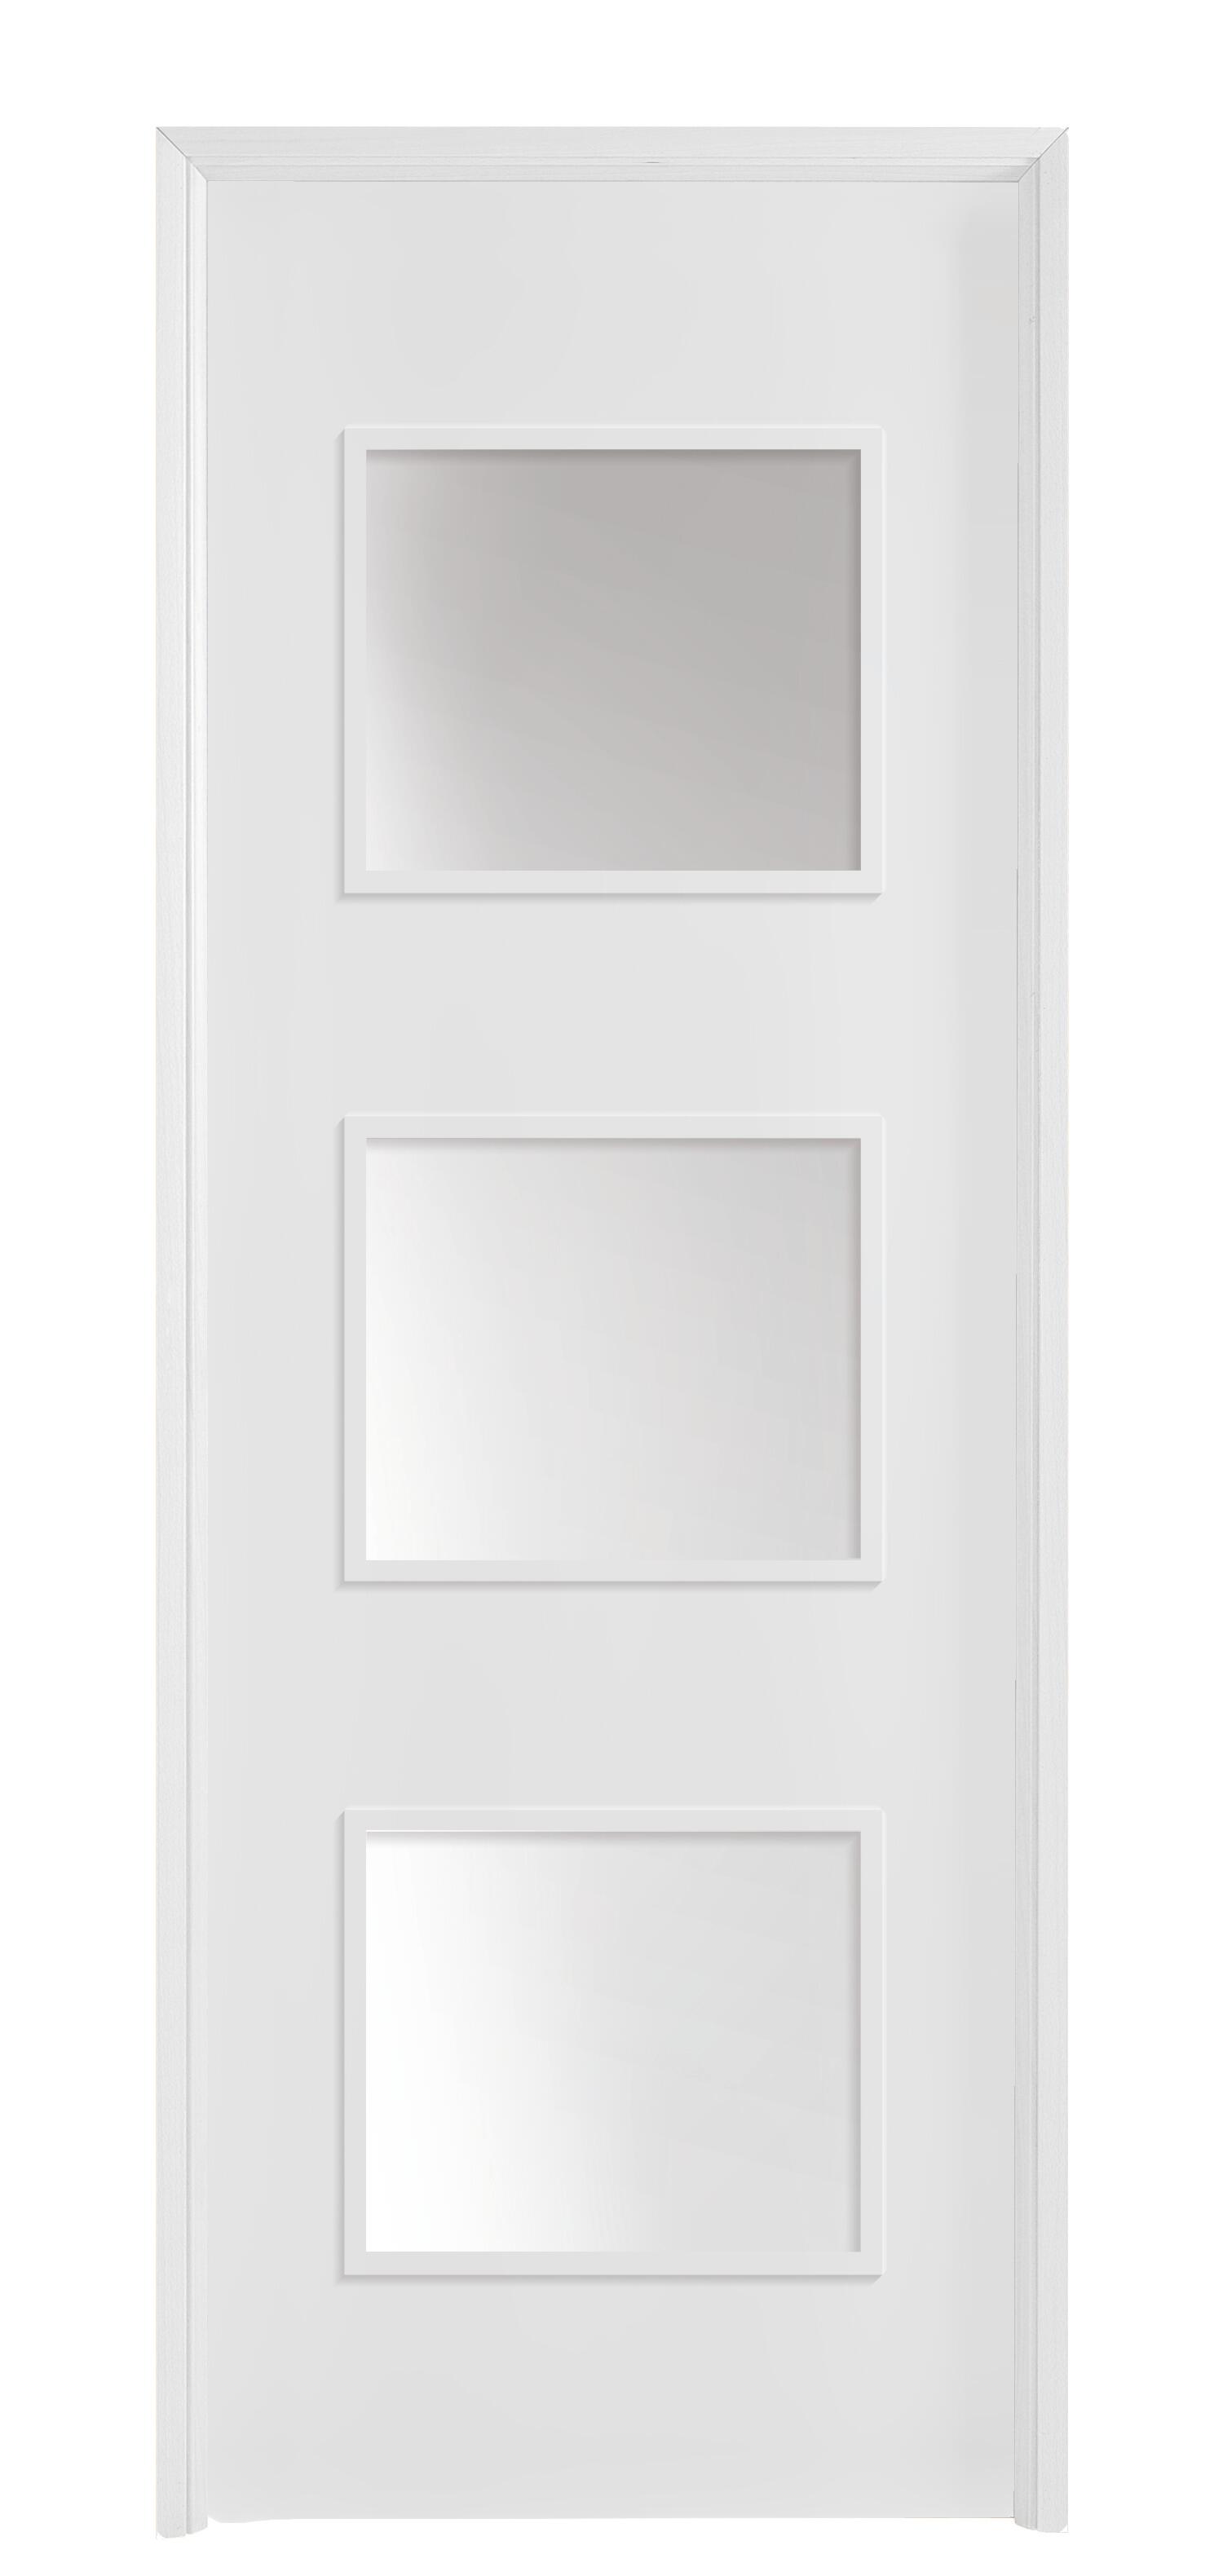 Puerta con cristal bari plus blanca 7x2x72,5 cm d